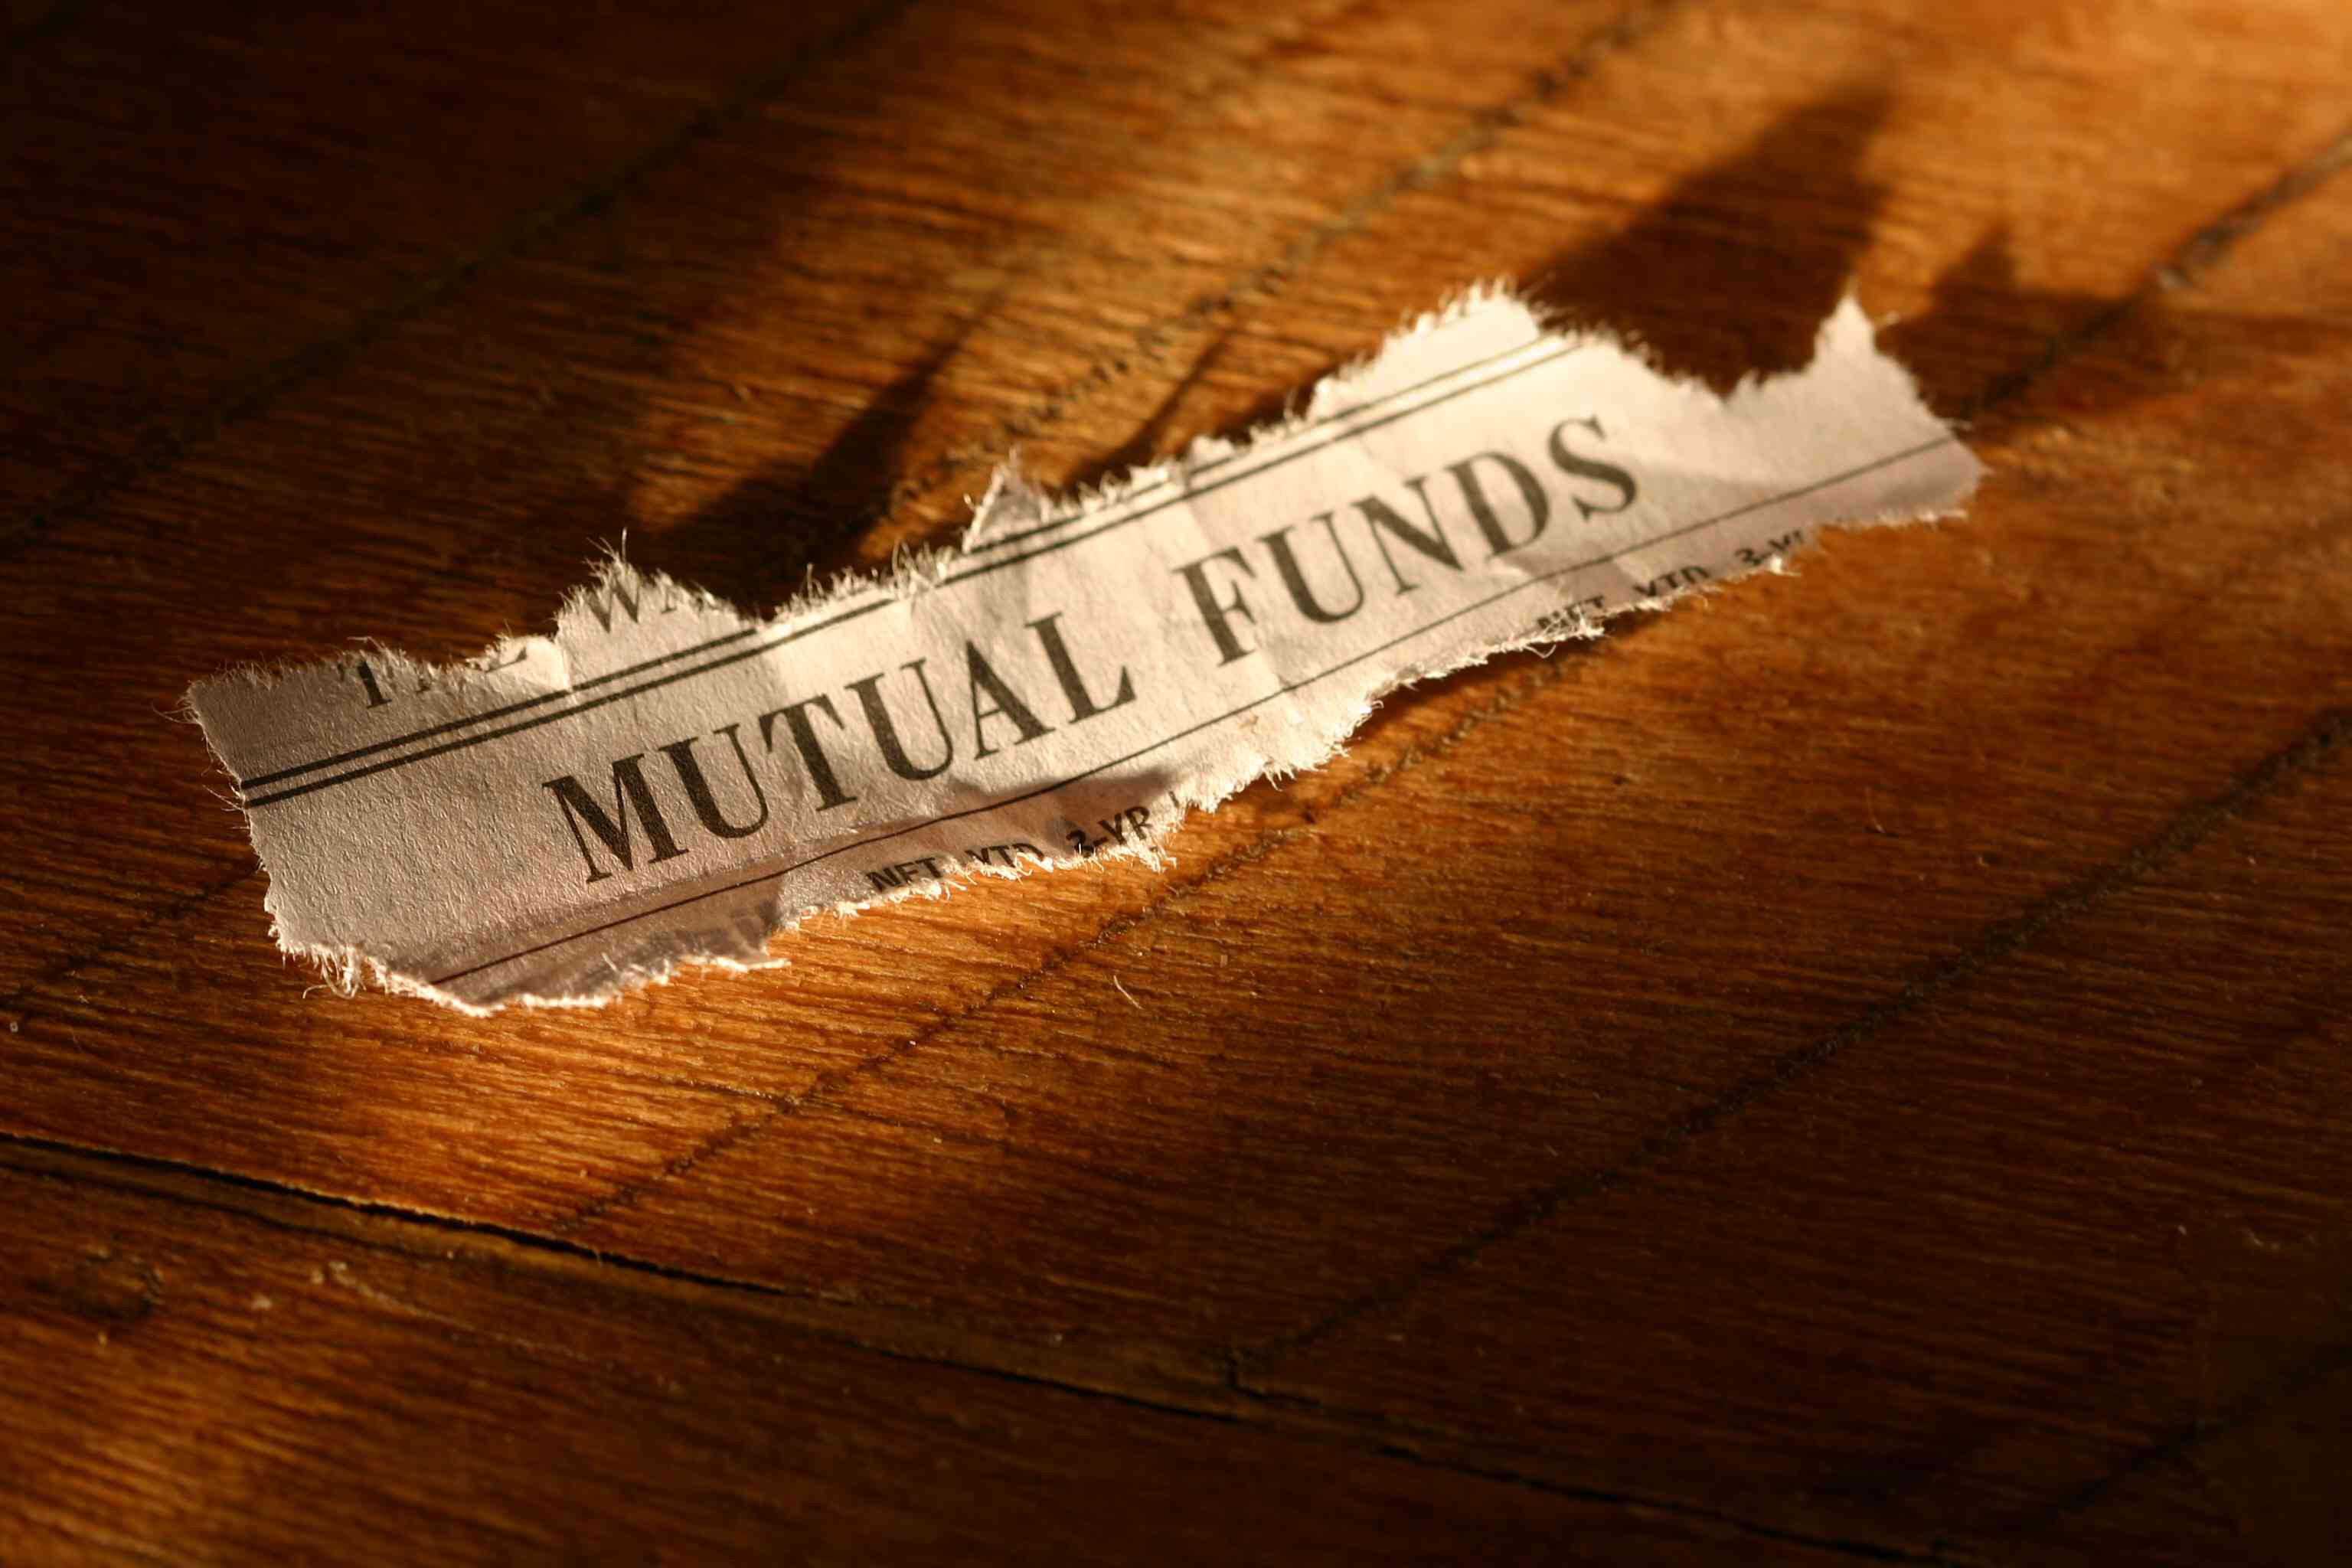 A torn Mutual Funds newspaper heading.